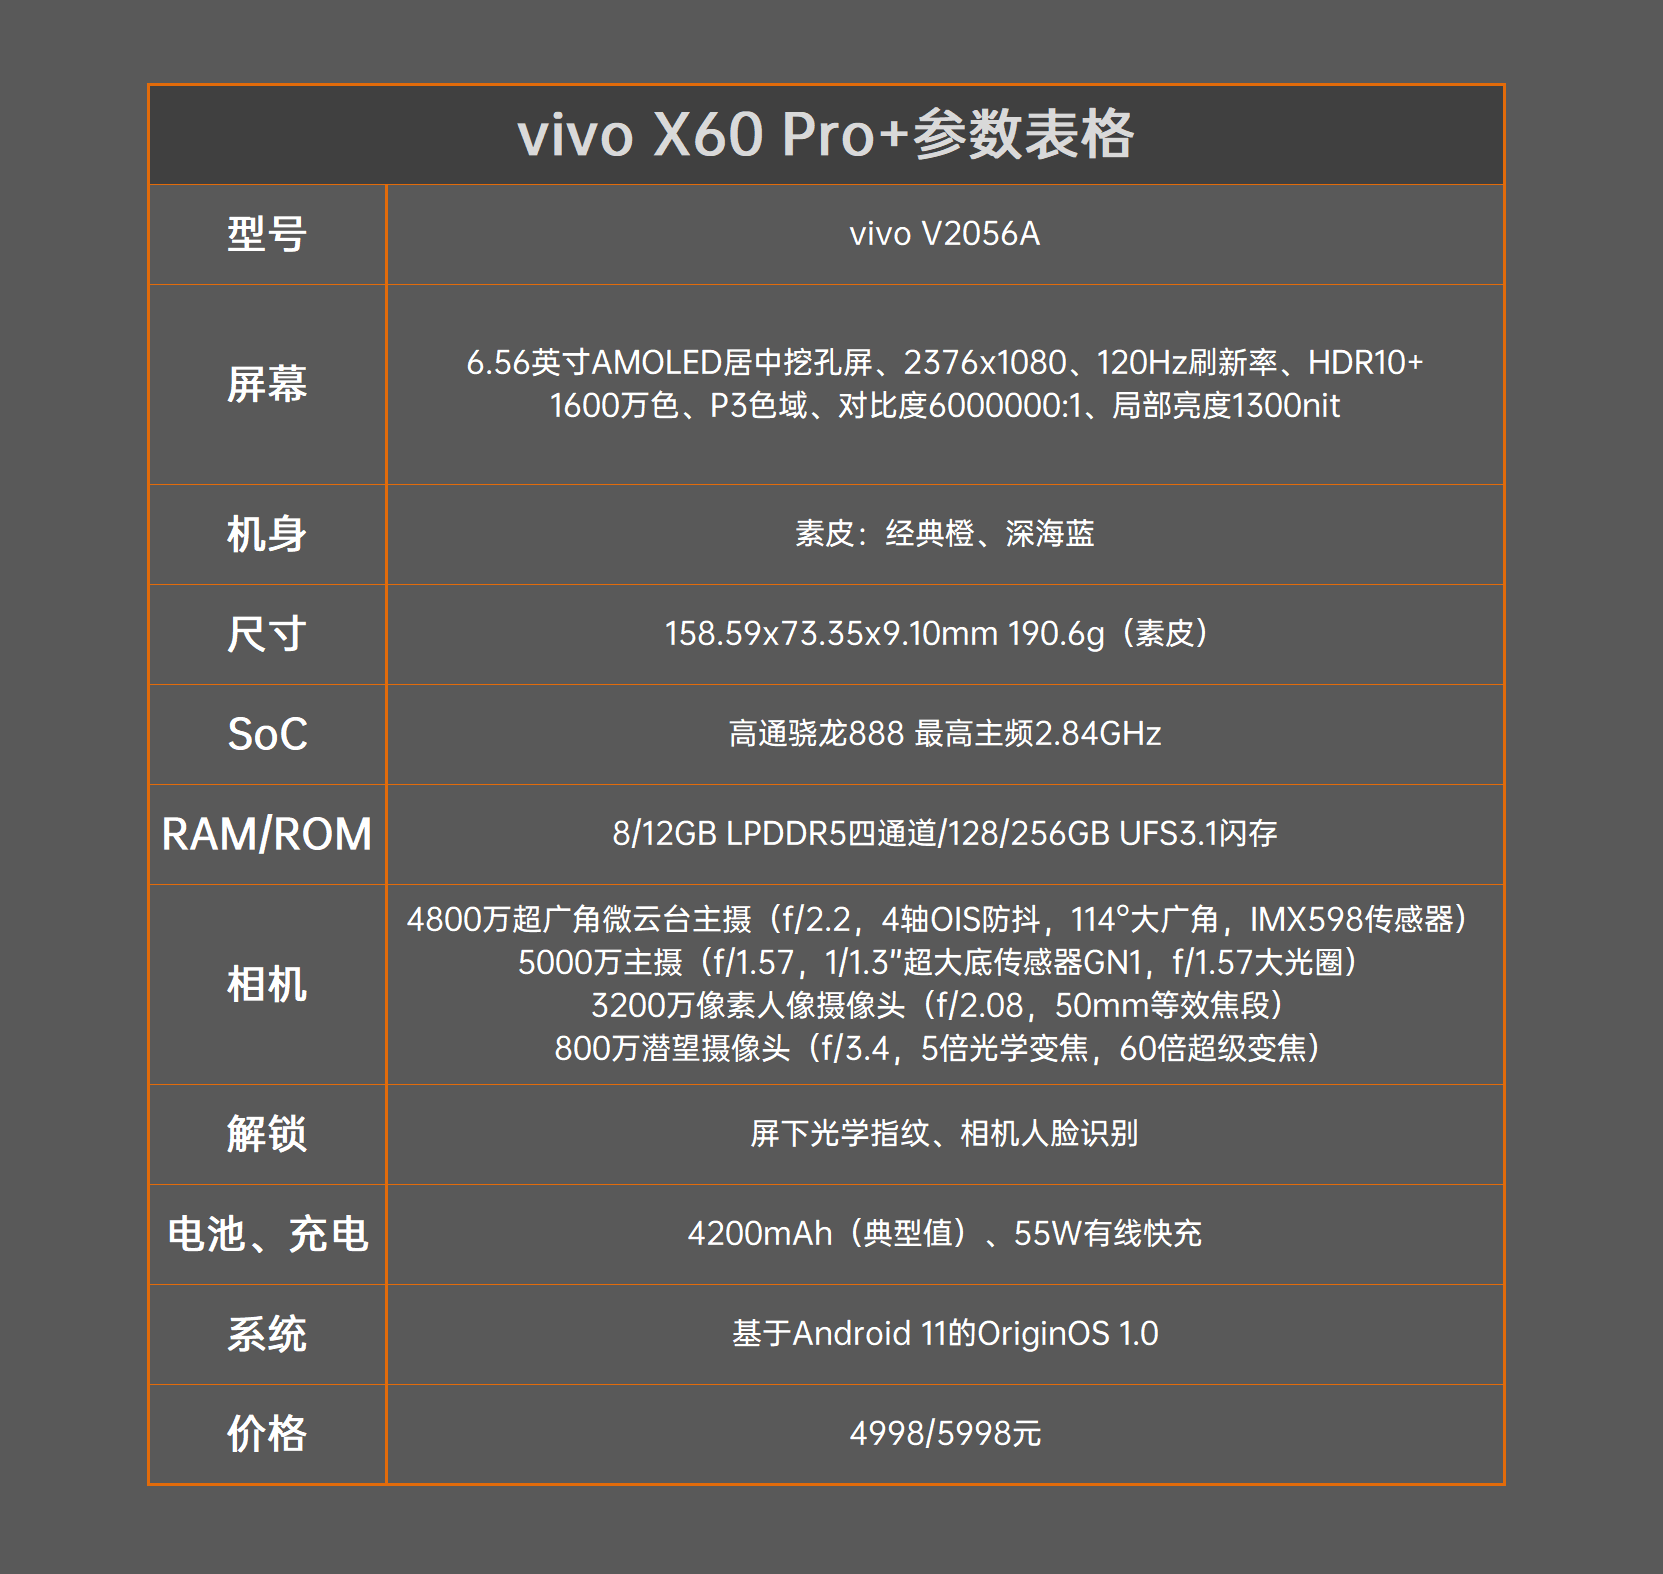 vivox60t参数配置图片